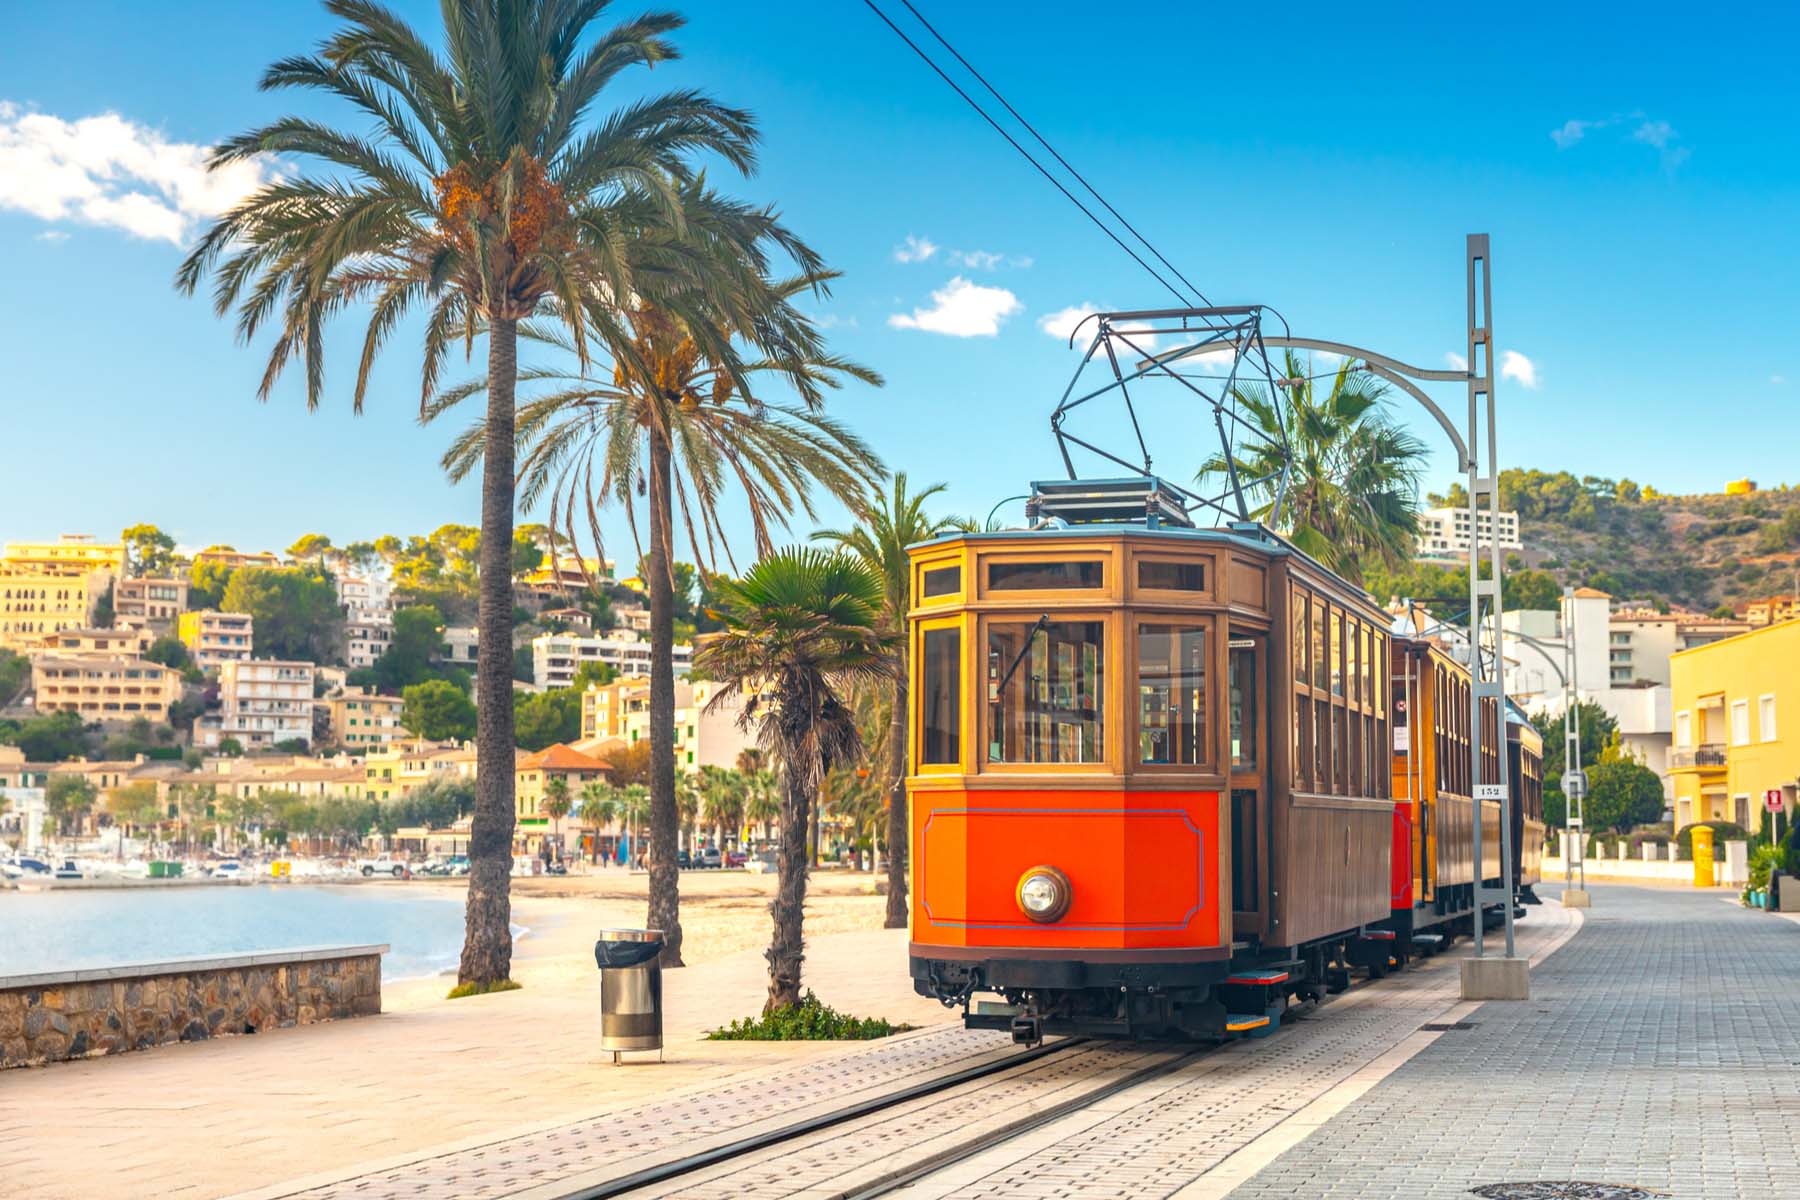 historic tram running on island of Mallorca